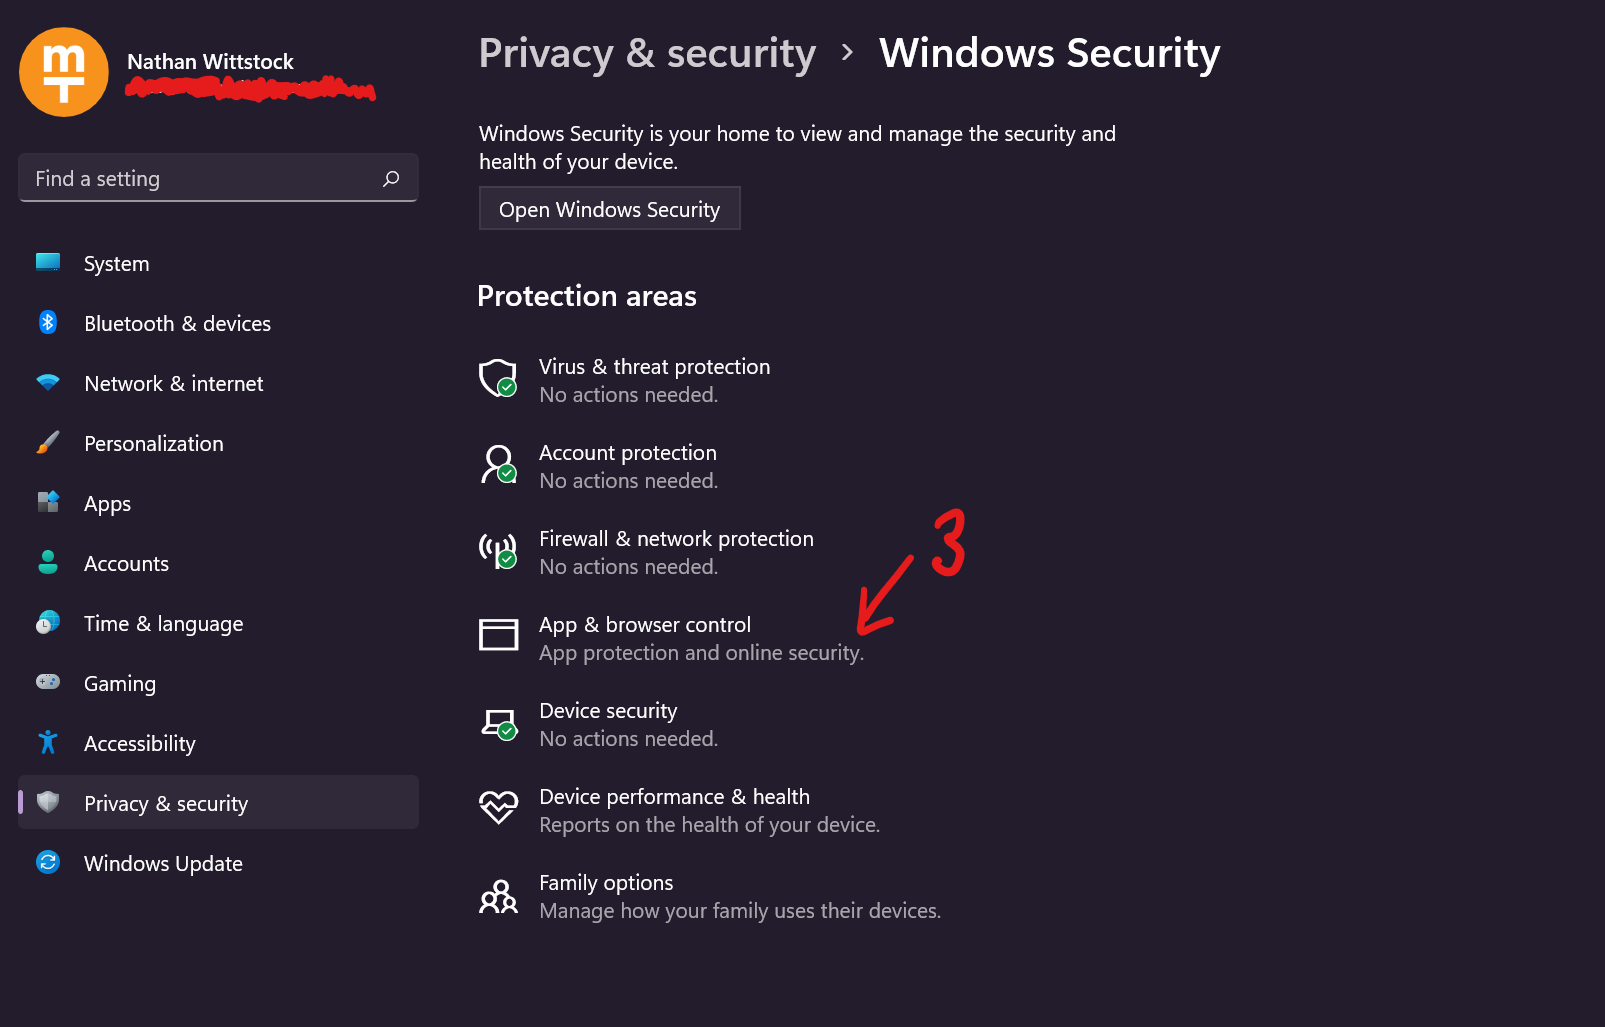 In Windows Security, click &ldquo;App & browser control&rdquo;